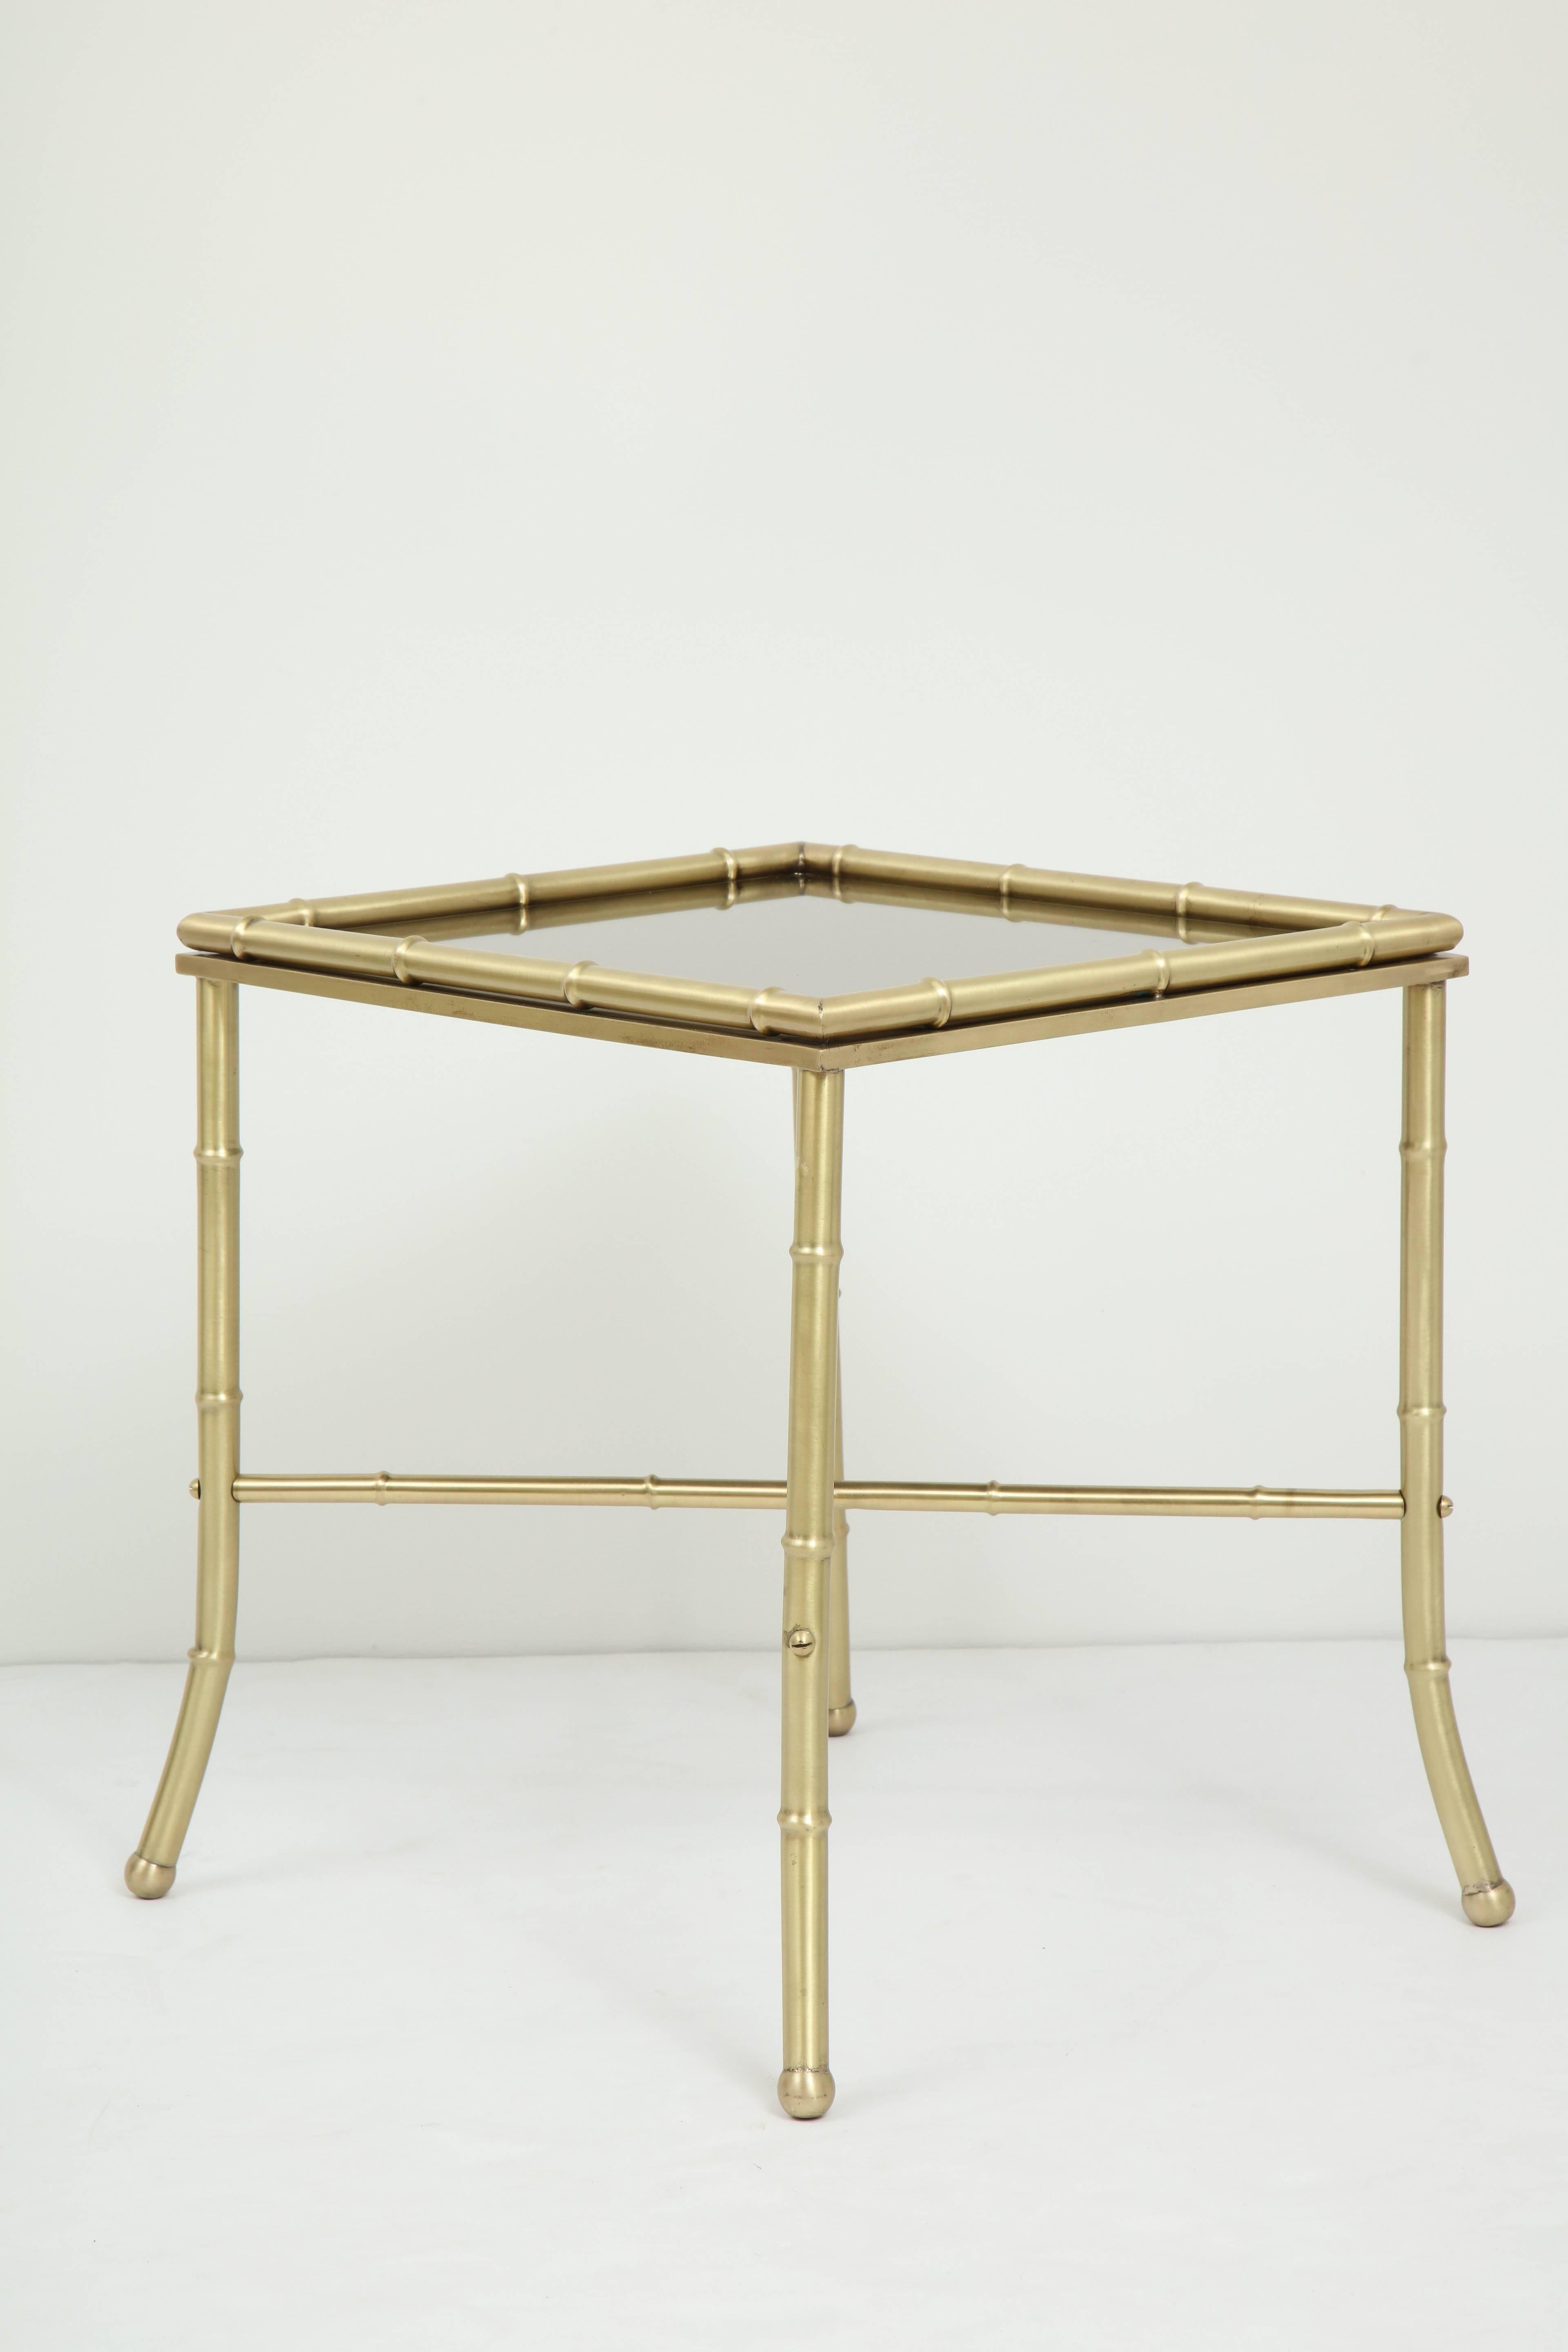 Maison Jansen Attributed Brass Side Tables 1